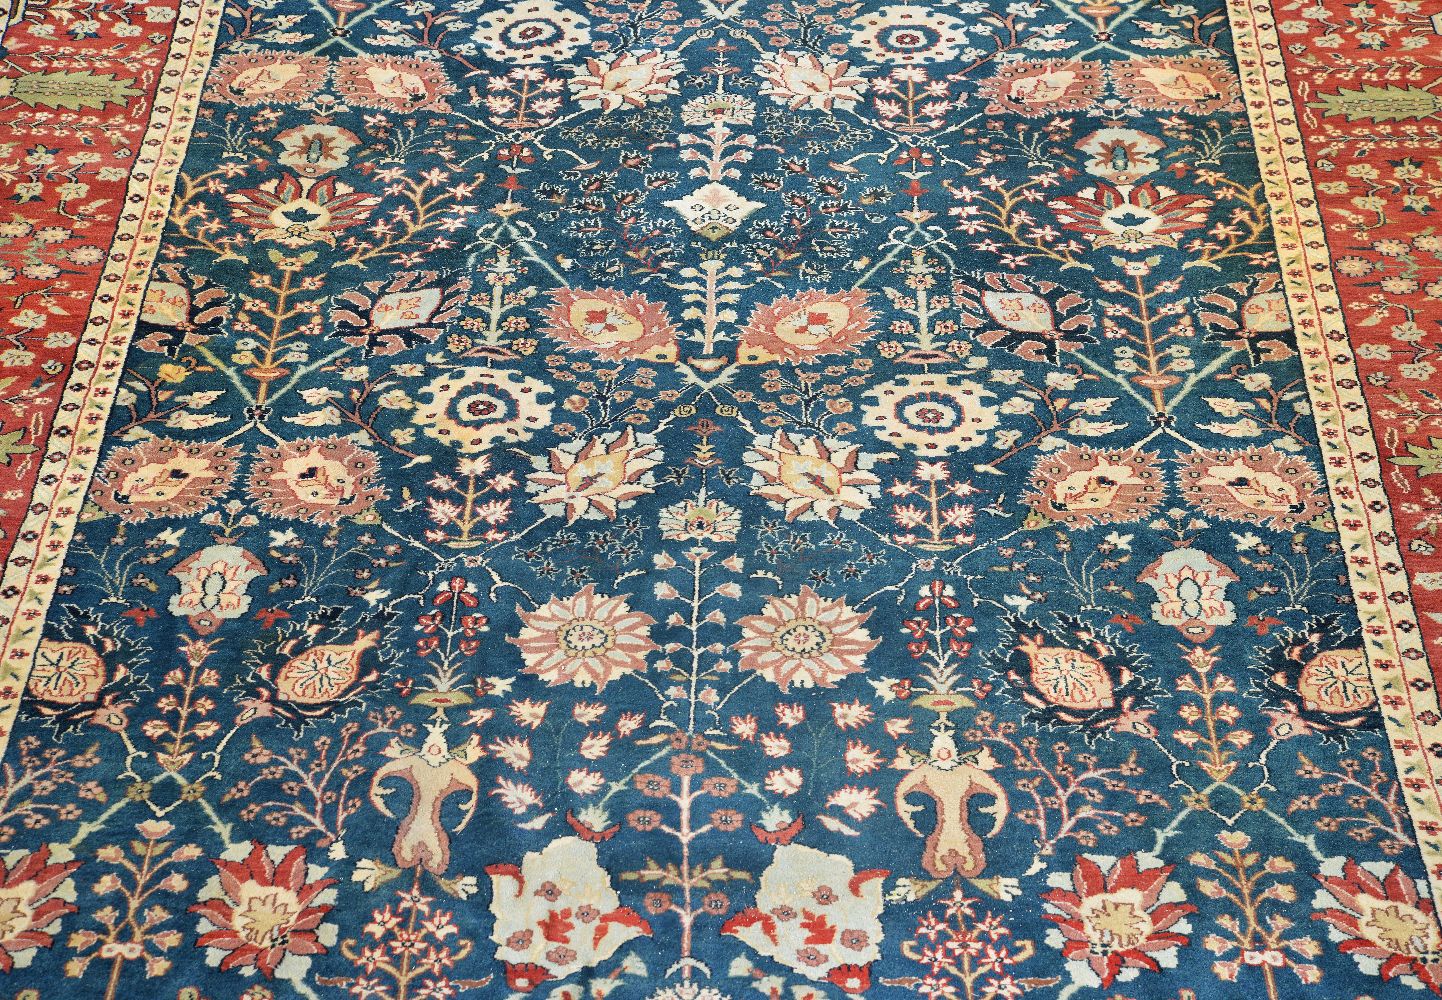 A woven carpet - Image 2 of 2